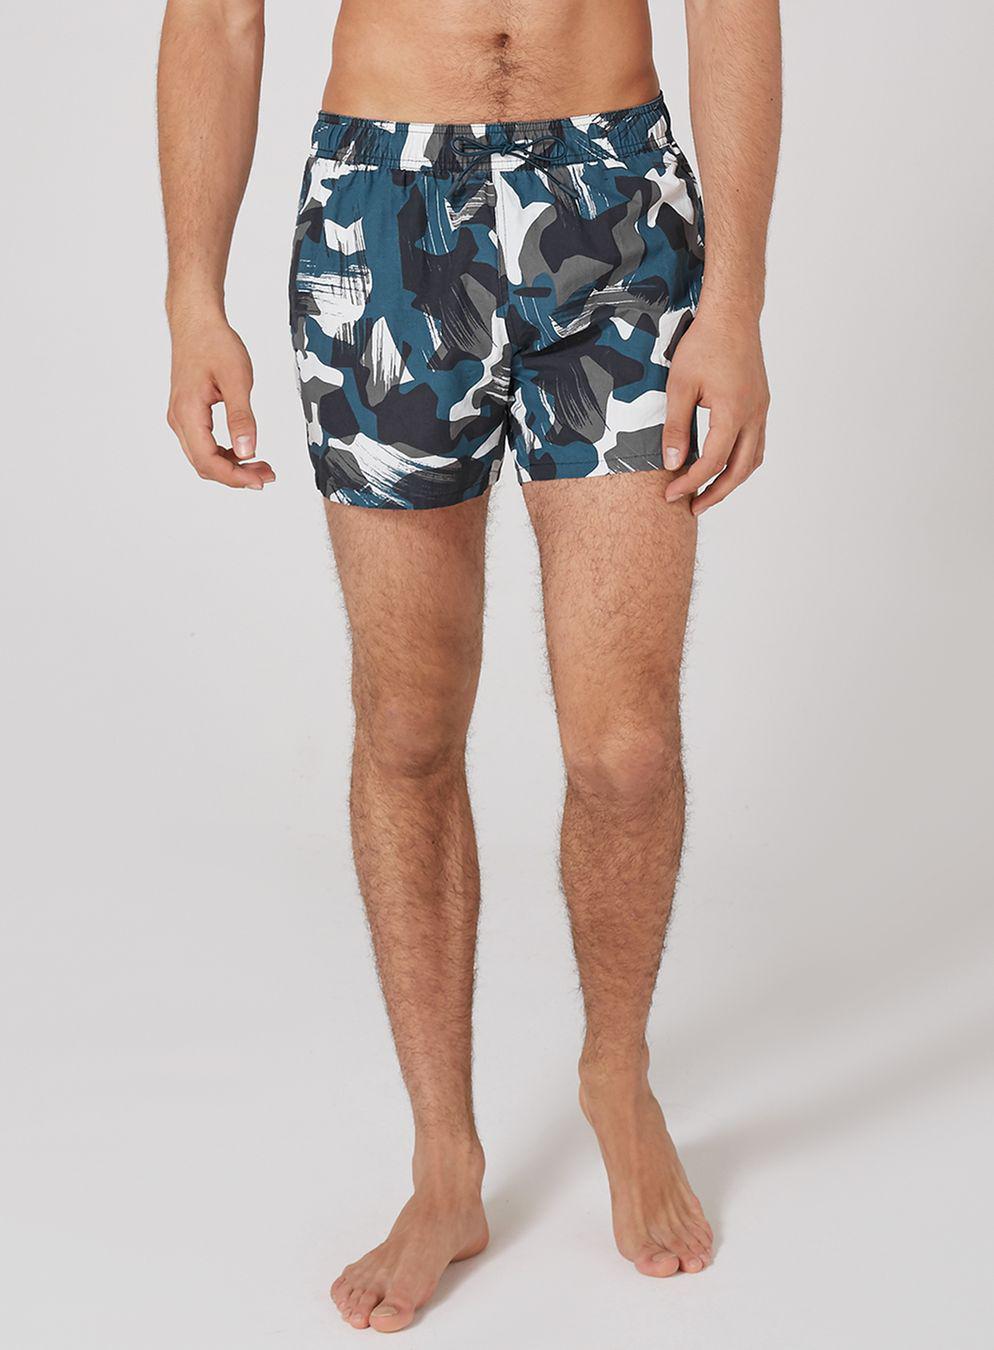 Lyst - Topman Camouflage Swim Shorts in Blue for Men